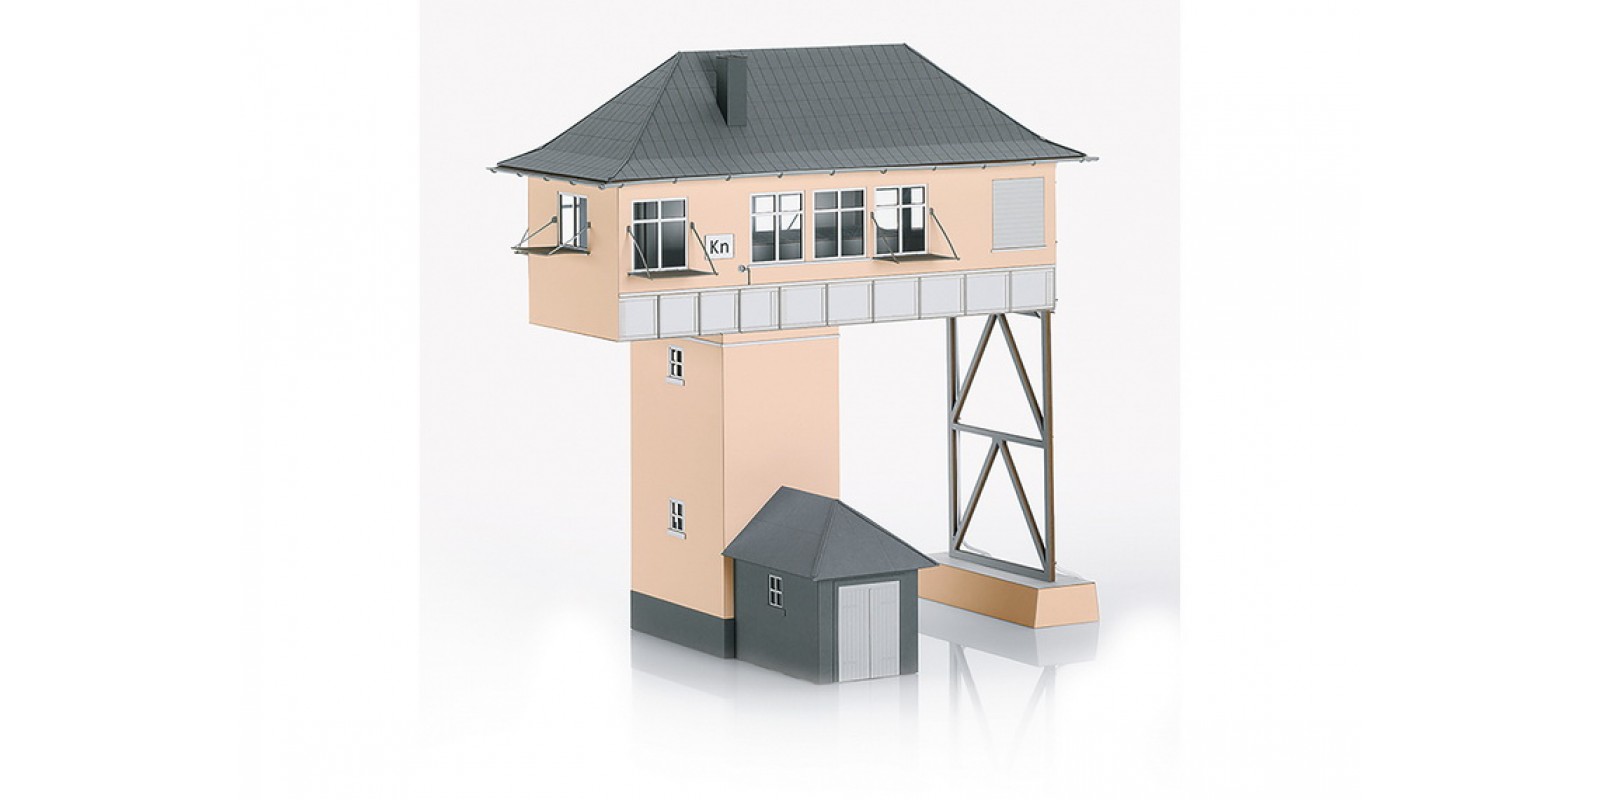 89601 Building Kit of the Kreuztal (Kn) Gantry-Style Signal Tower